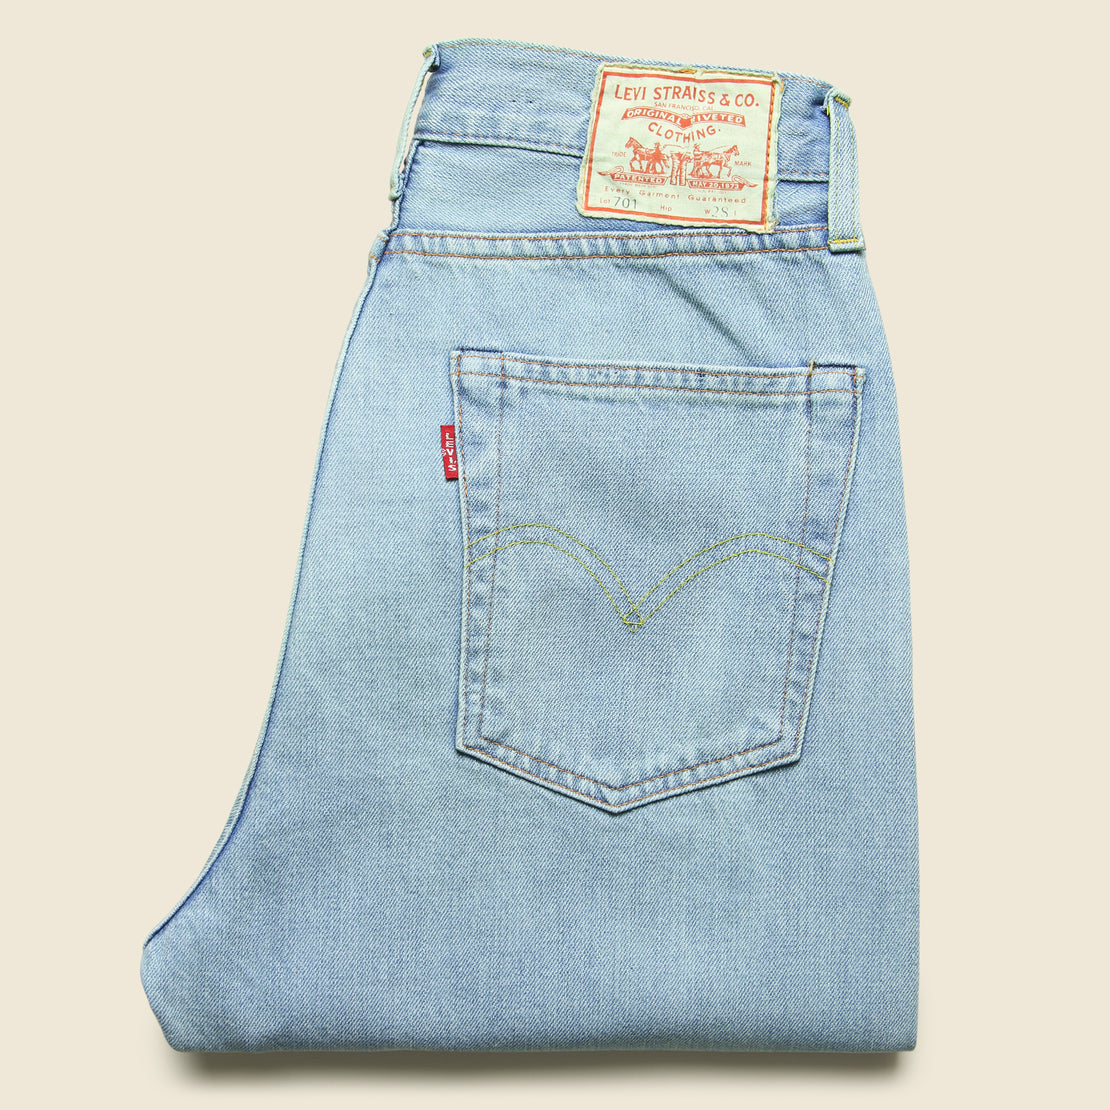 1950s 701 Jean - Stardust Wash - Levis Vintage Clothing - STAG Provisions - W - Pants - Denim